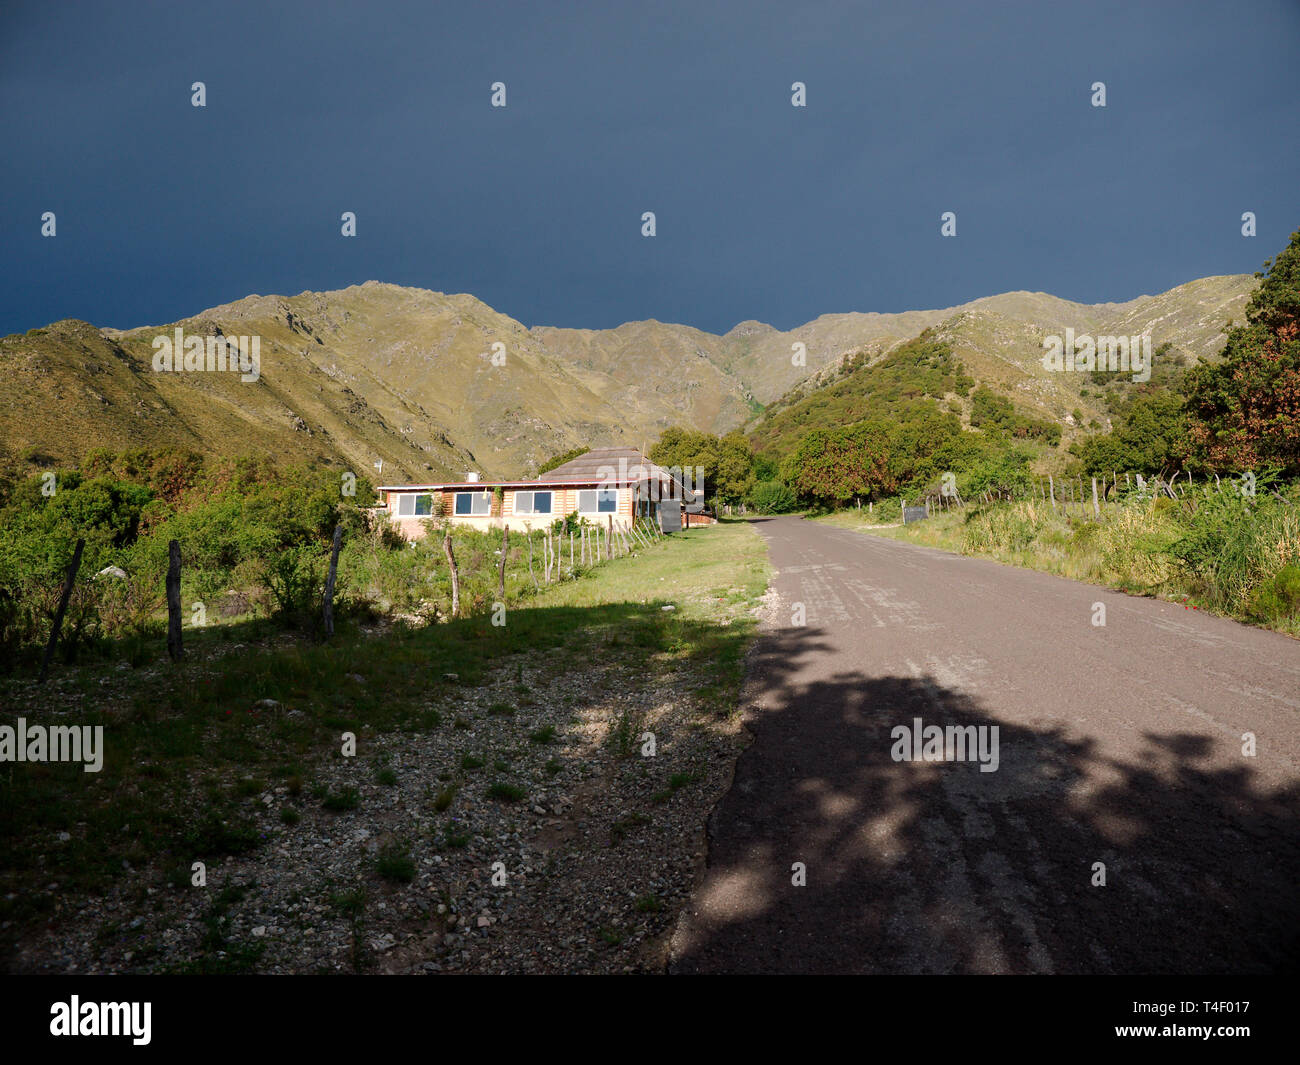 Villa de Merlo, San Luis, Argentina - 2019: The view alongside a rural road near the city center. Stock Photo